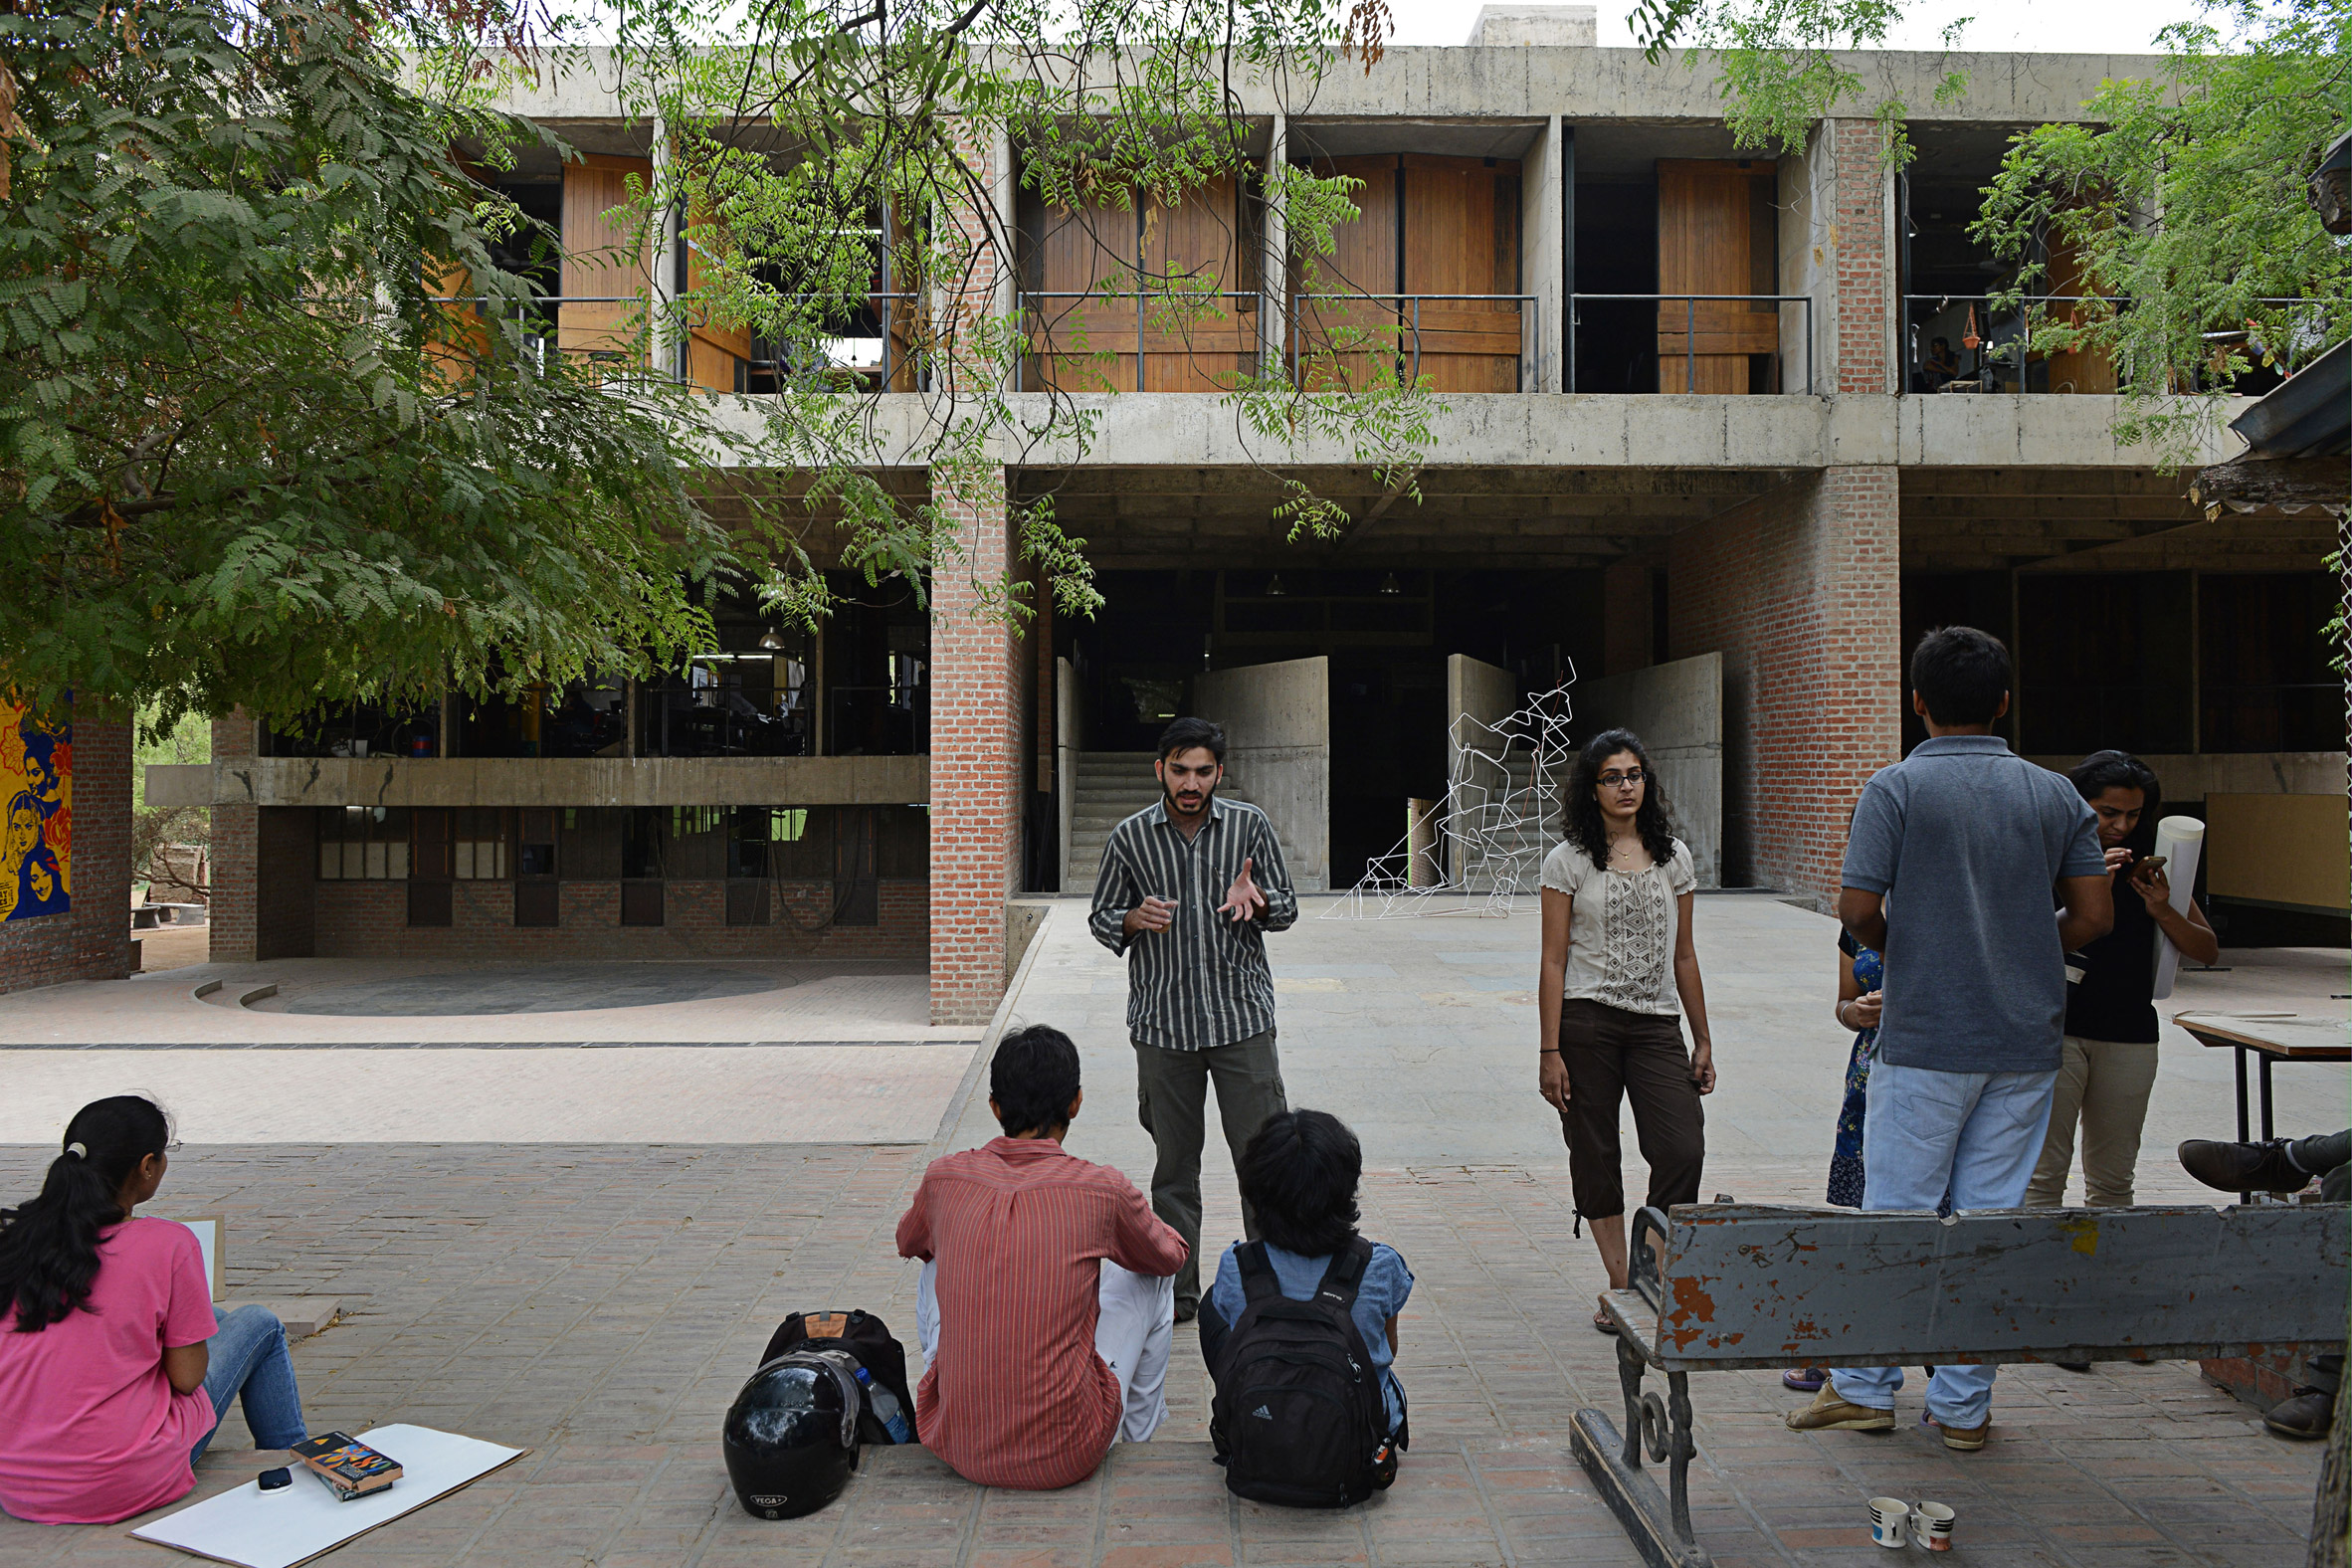 CEPT University designed by Balkrishna Doshi